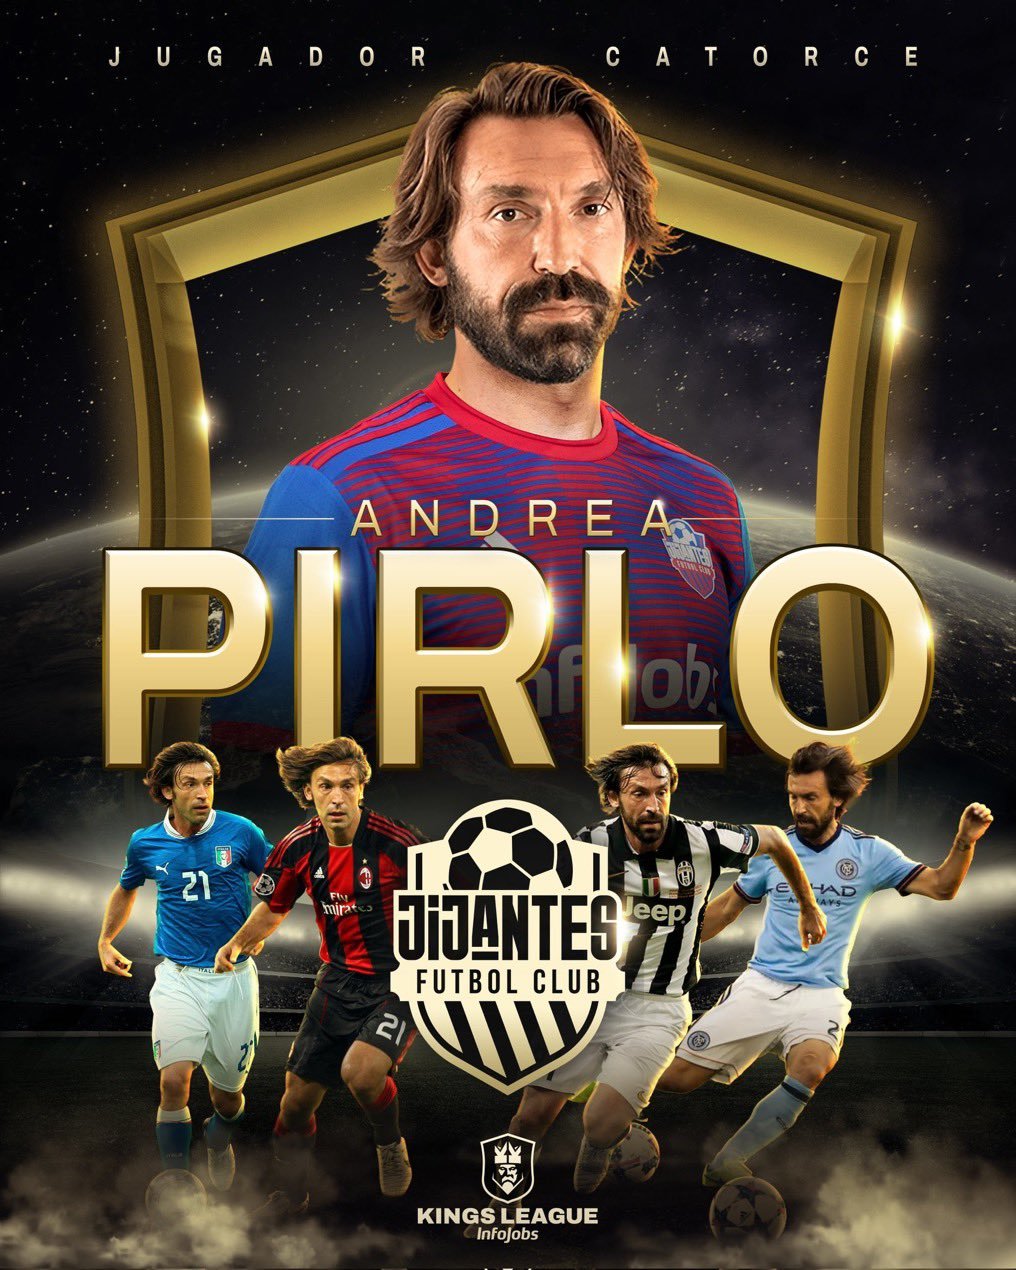 Andrea Pirlo jugar en la Kings League InfoJobs